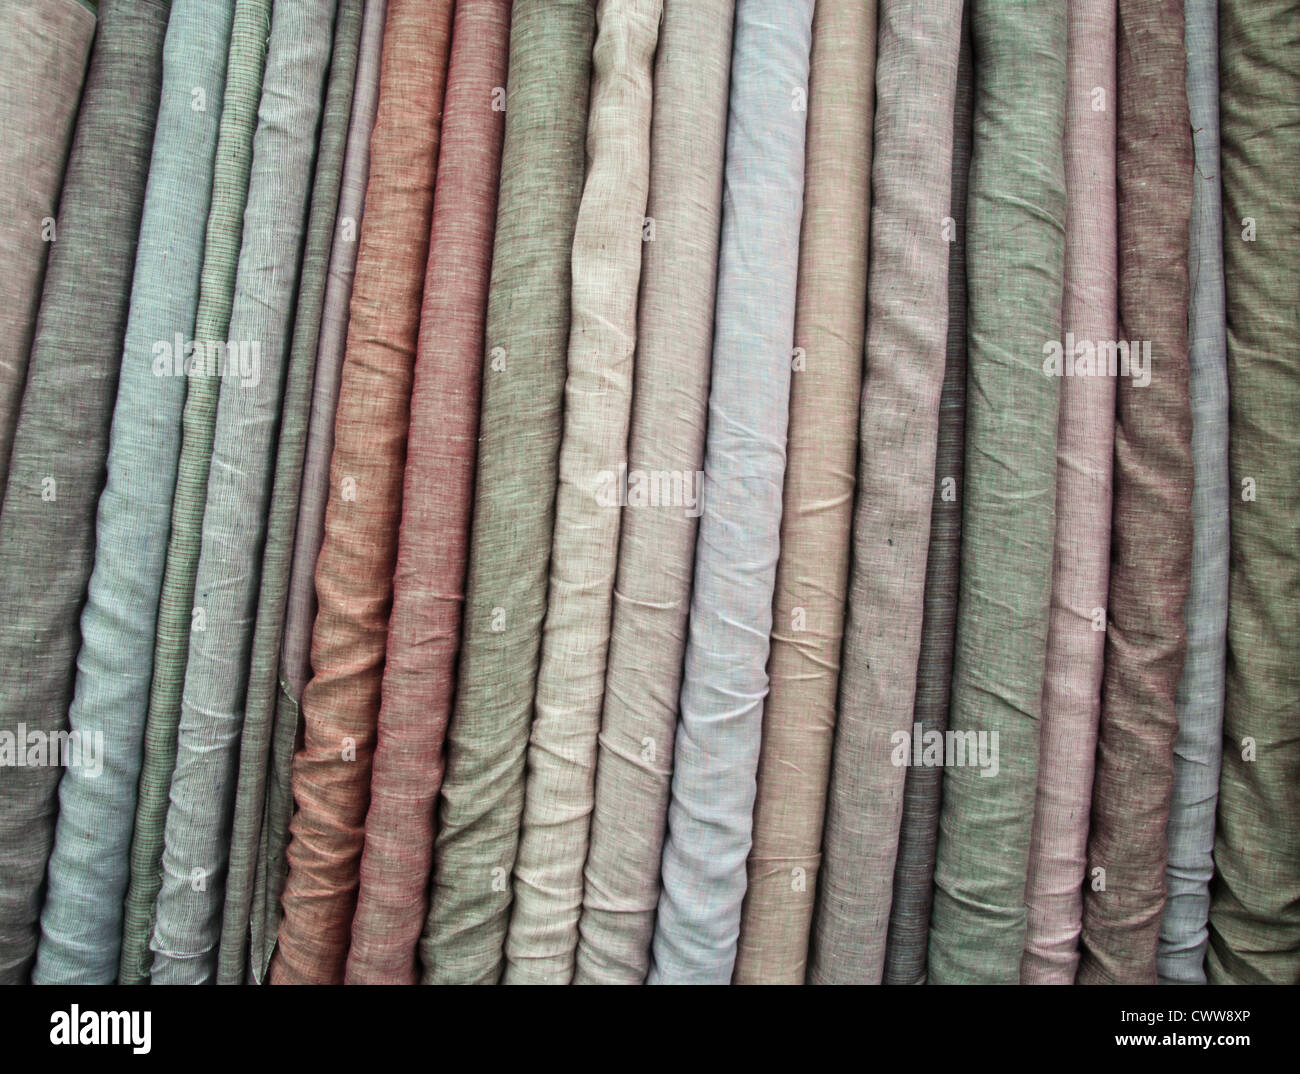 Piles of cotton linen fabric Stock Photo